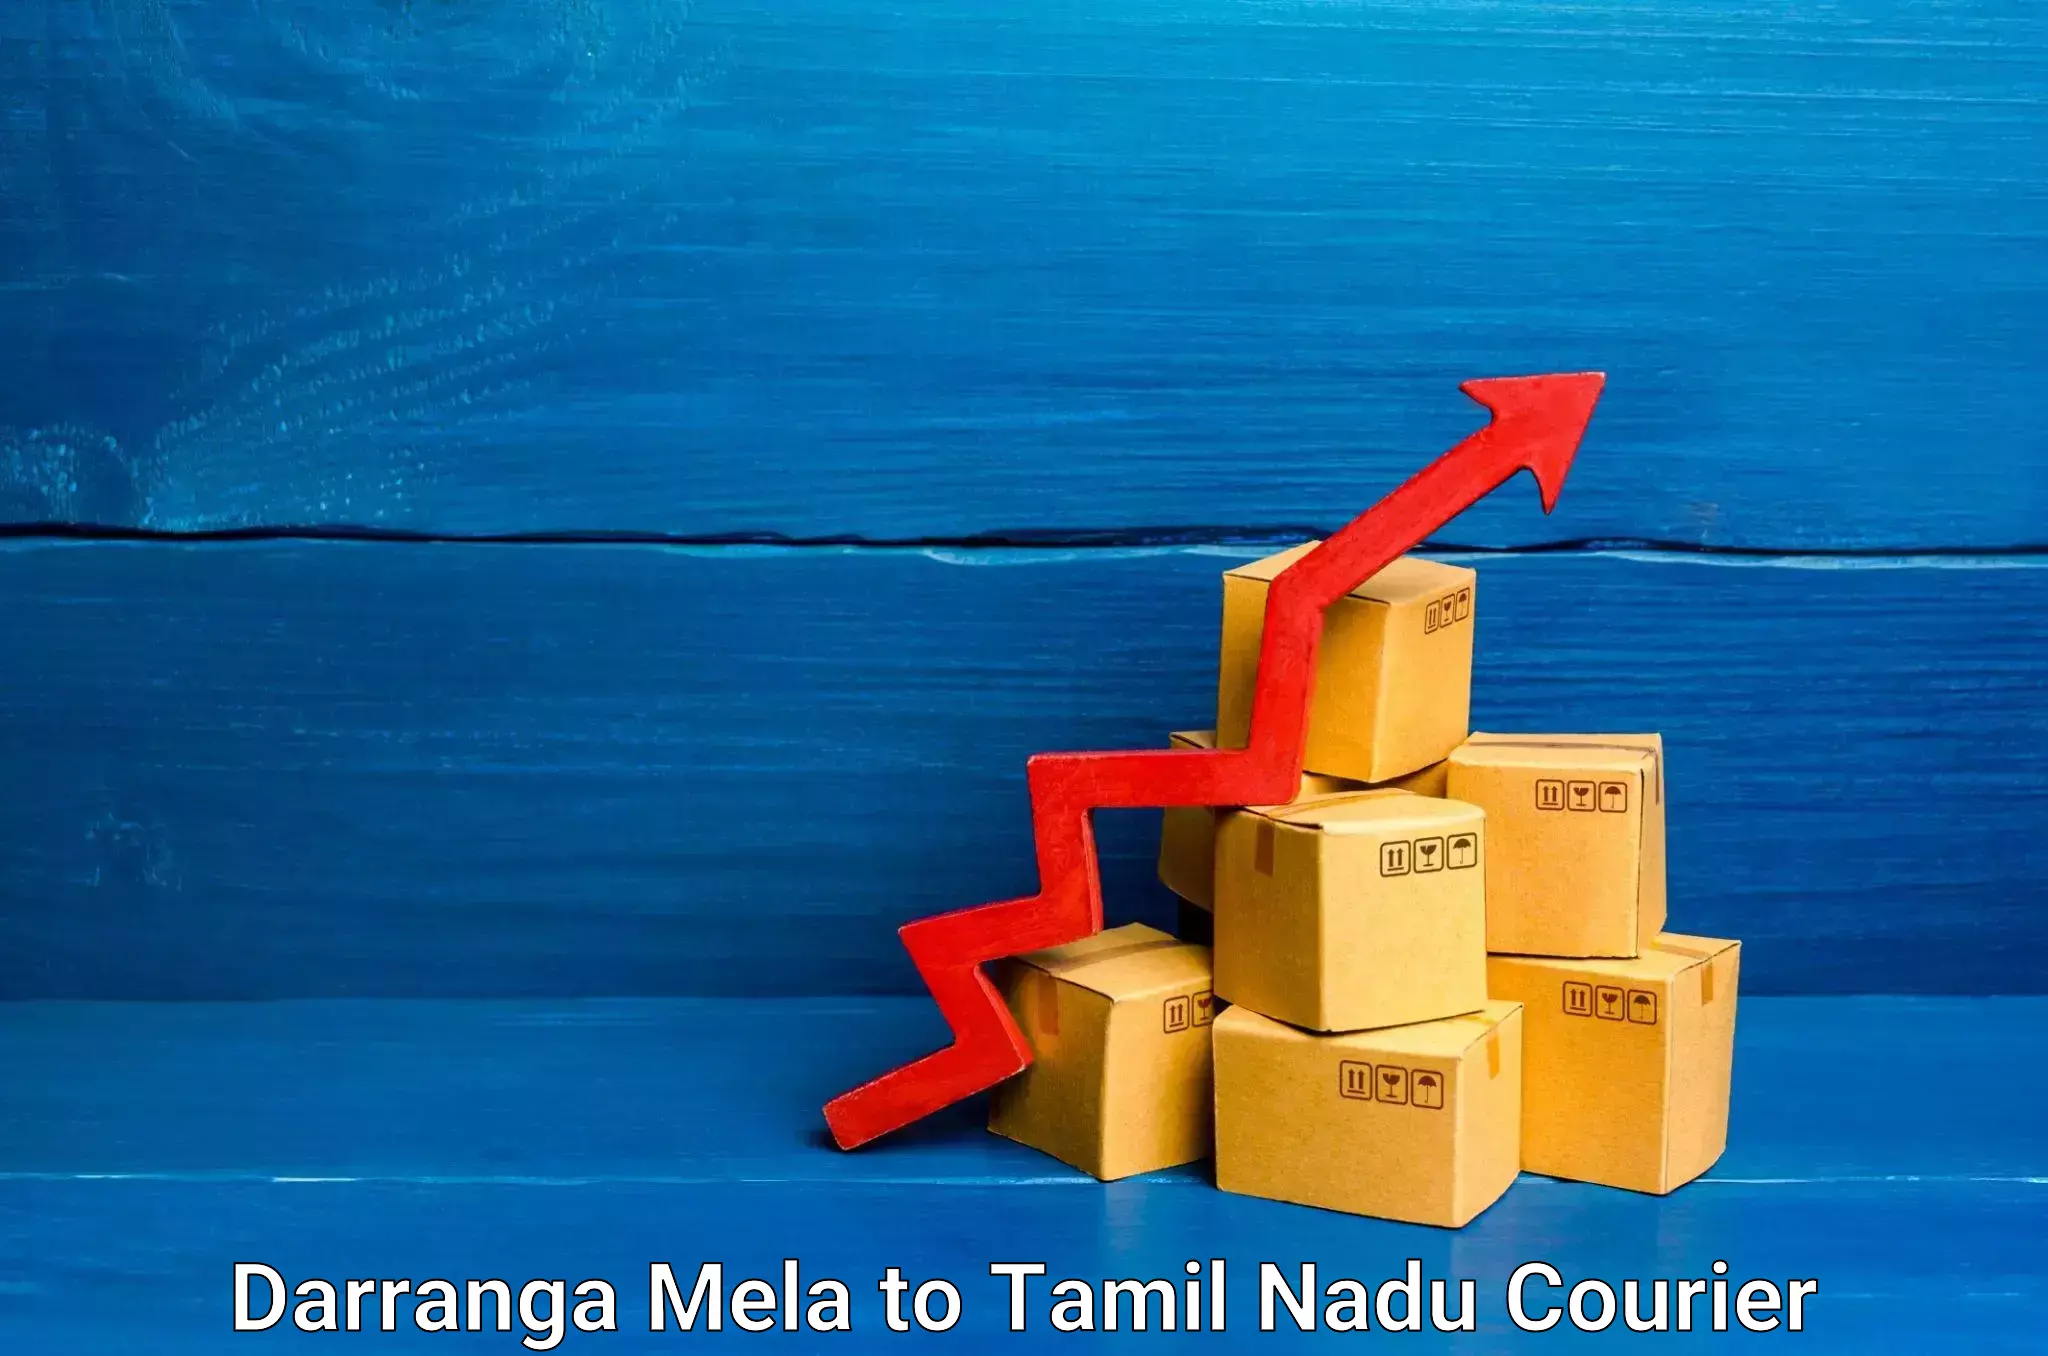 Fast delivery service Darranga Mela to Tamil Nadu